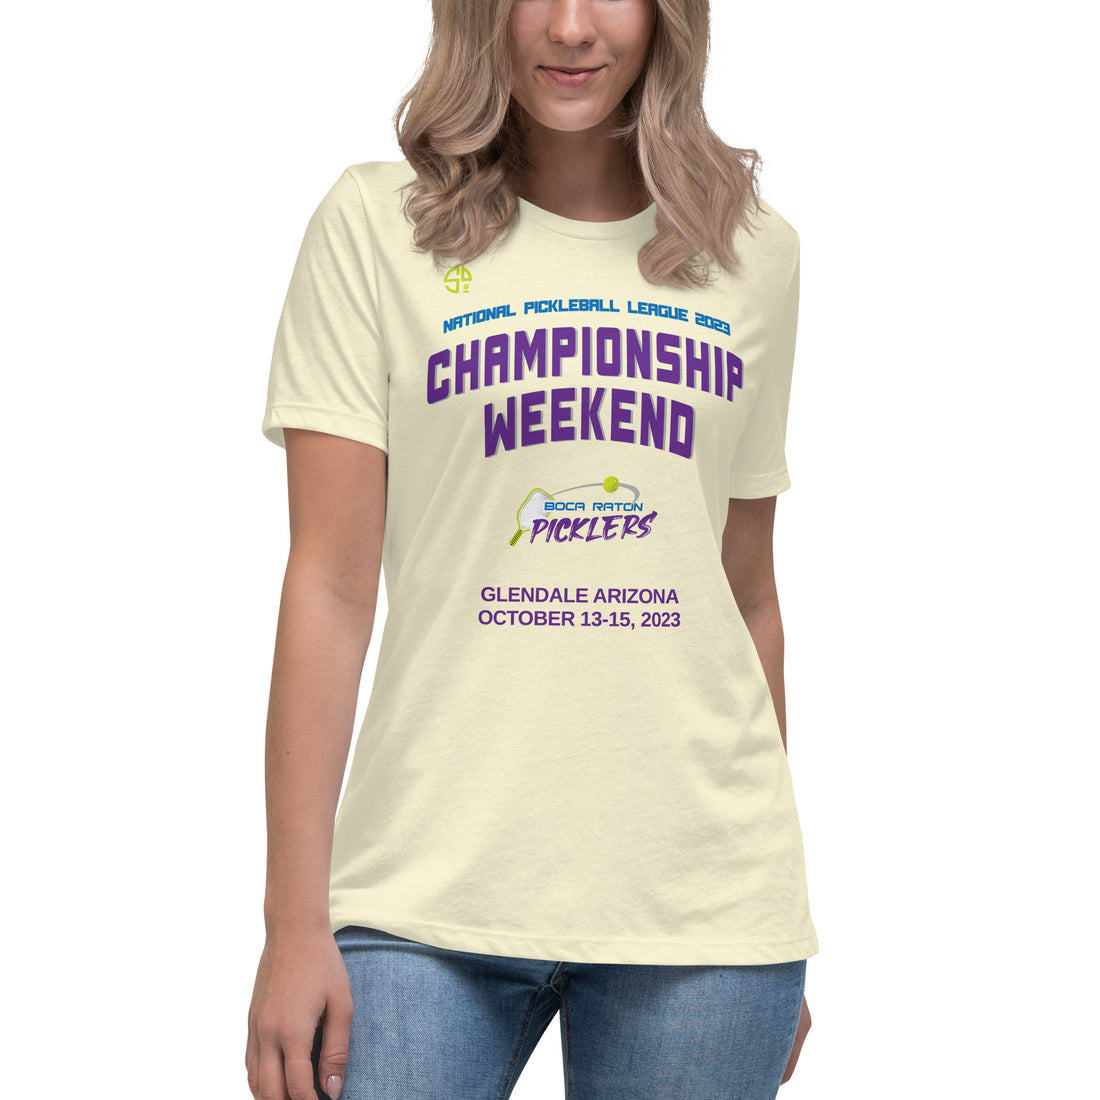 BOCA RATON PICKLERS™ NPL™ CHAMPIONSHIP WEEKEND - COMMEMORATIVE SHIRT! Women's Relaxed T-Shirt